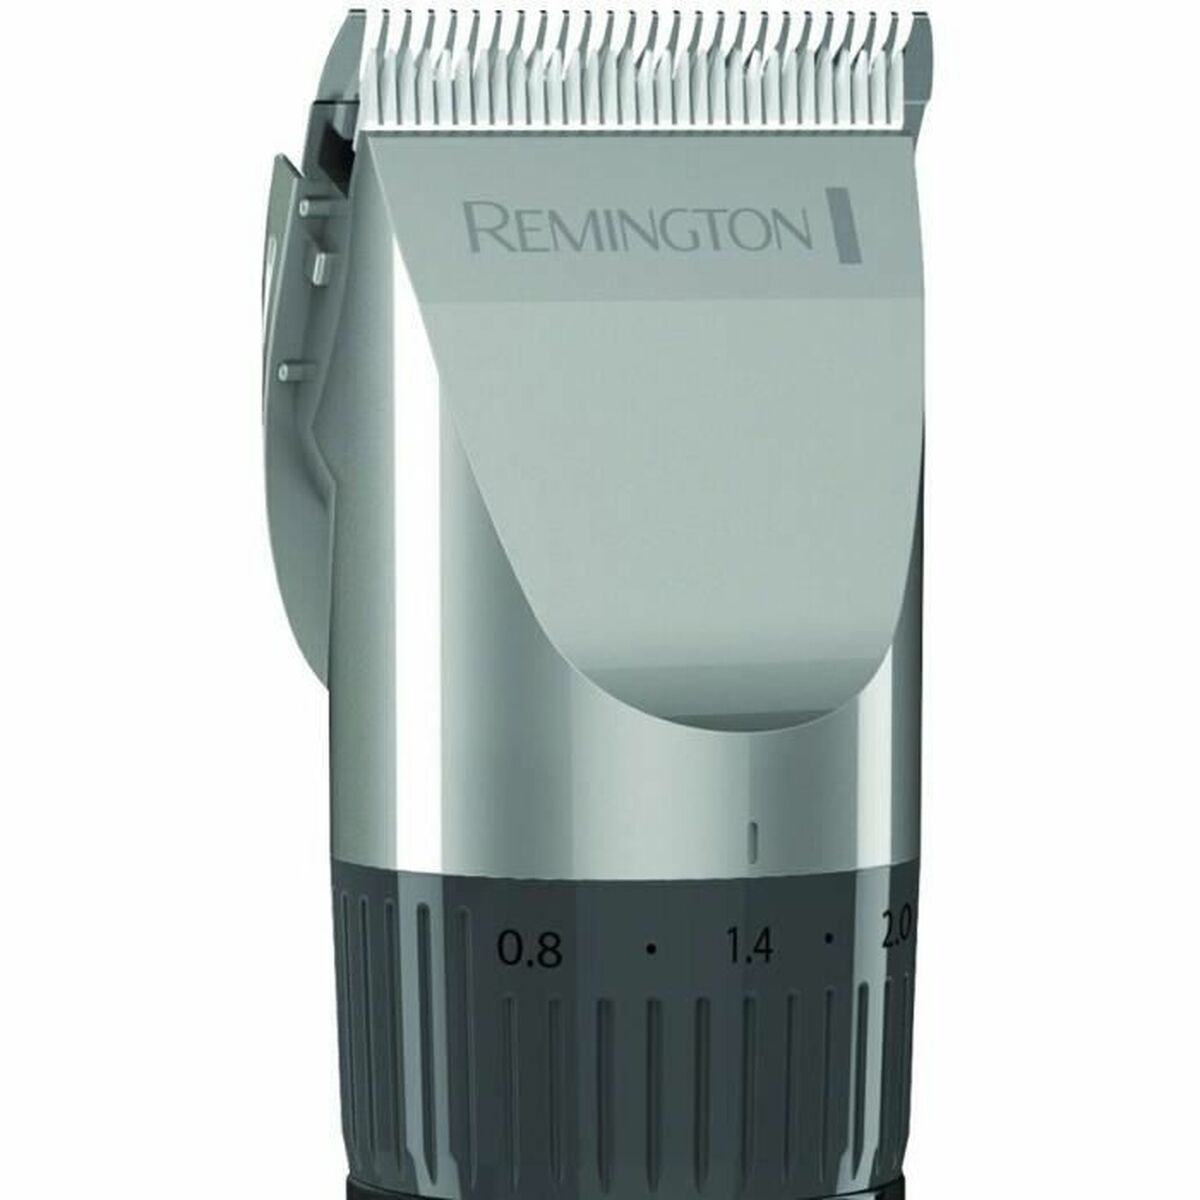 Kaufe Remington HC5810 Haarschneider/Rasierer bei AWK Flagship um € 79.00